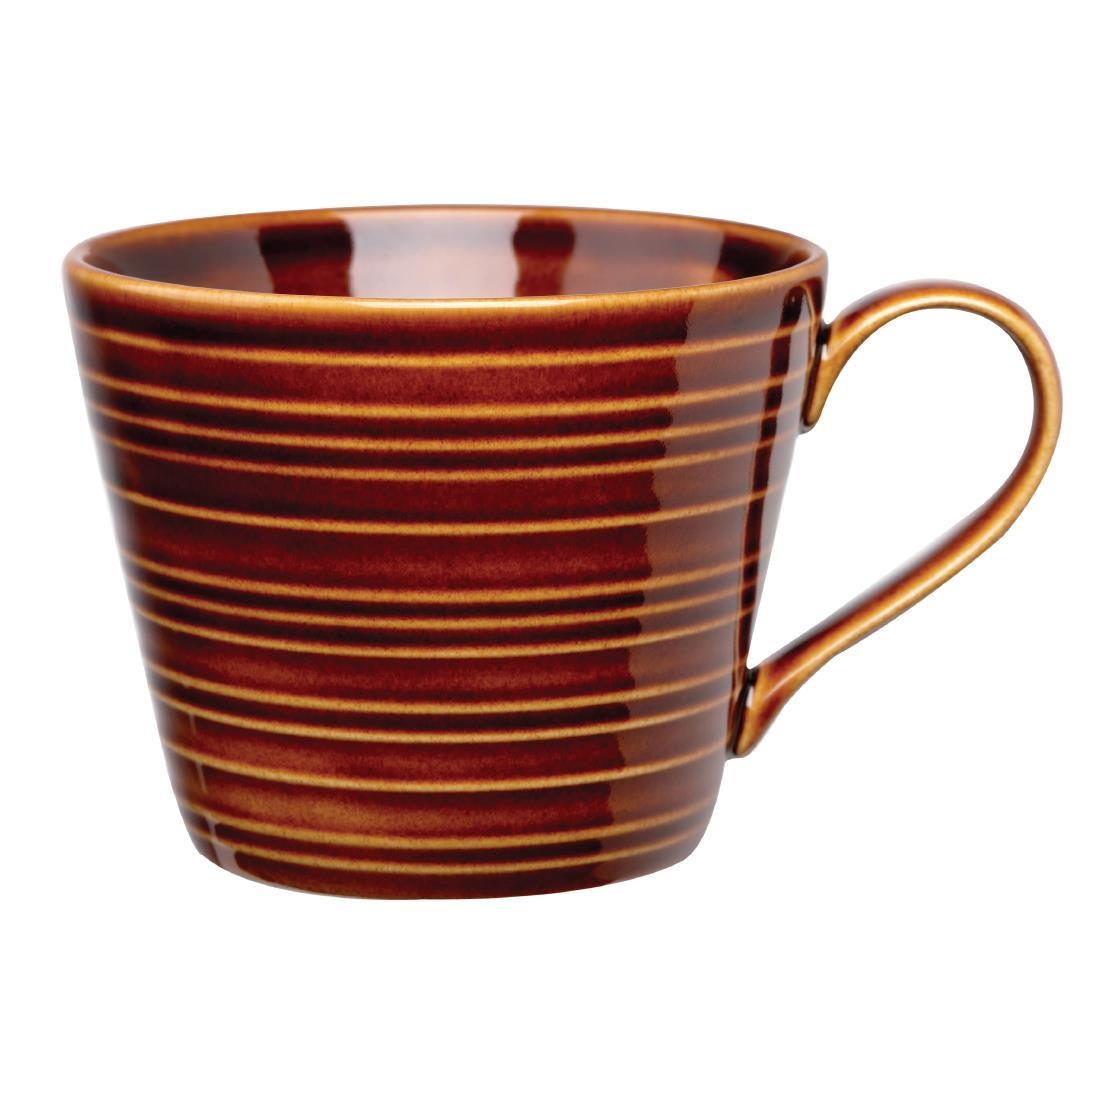 Art de Cuisine Rustics Brown Snug Mugs 341ml (Pack of 6) - GF703  - 1